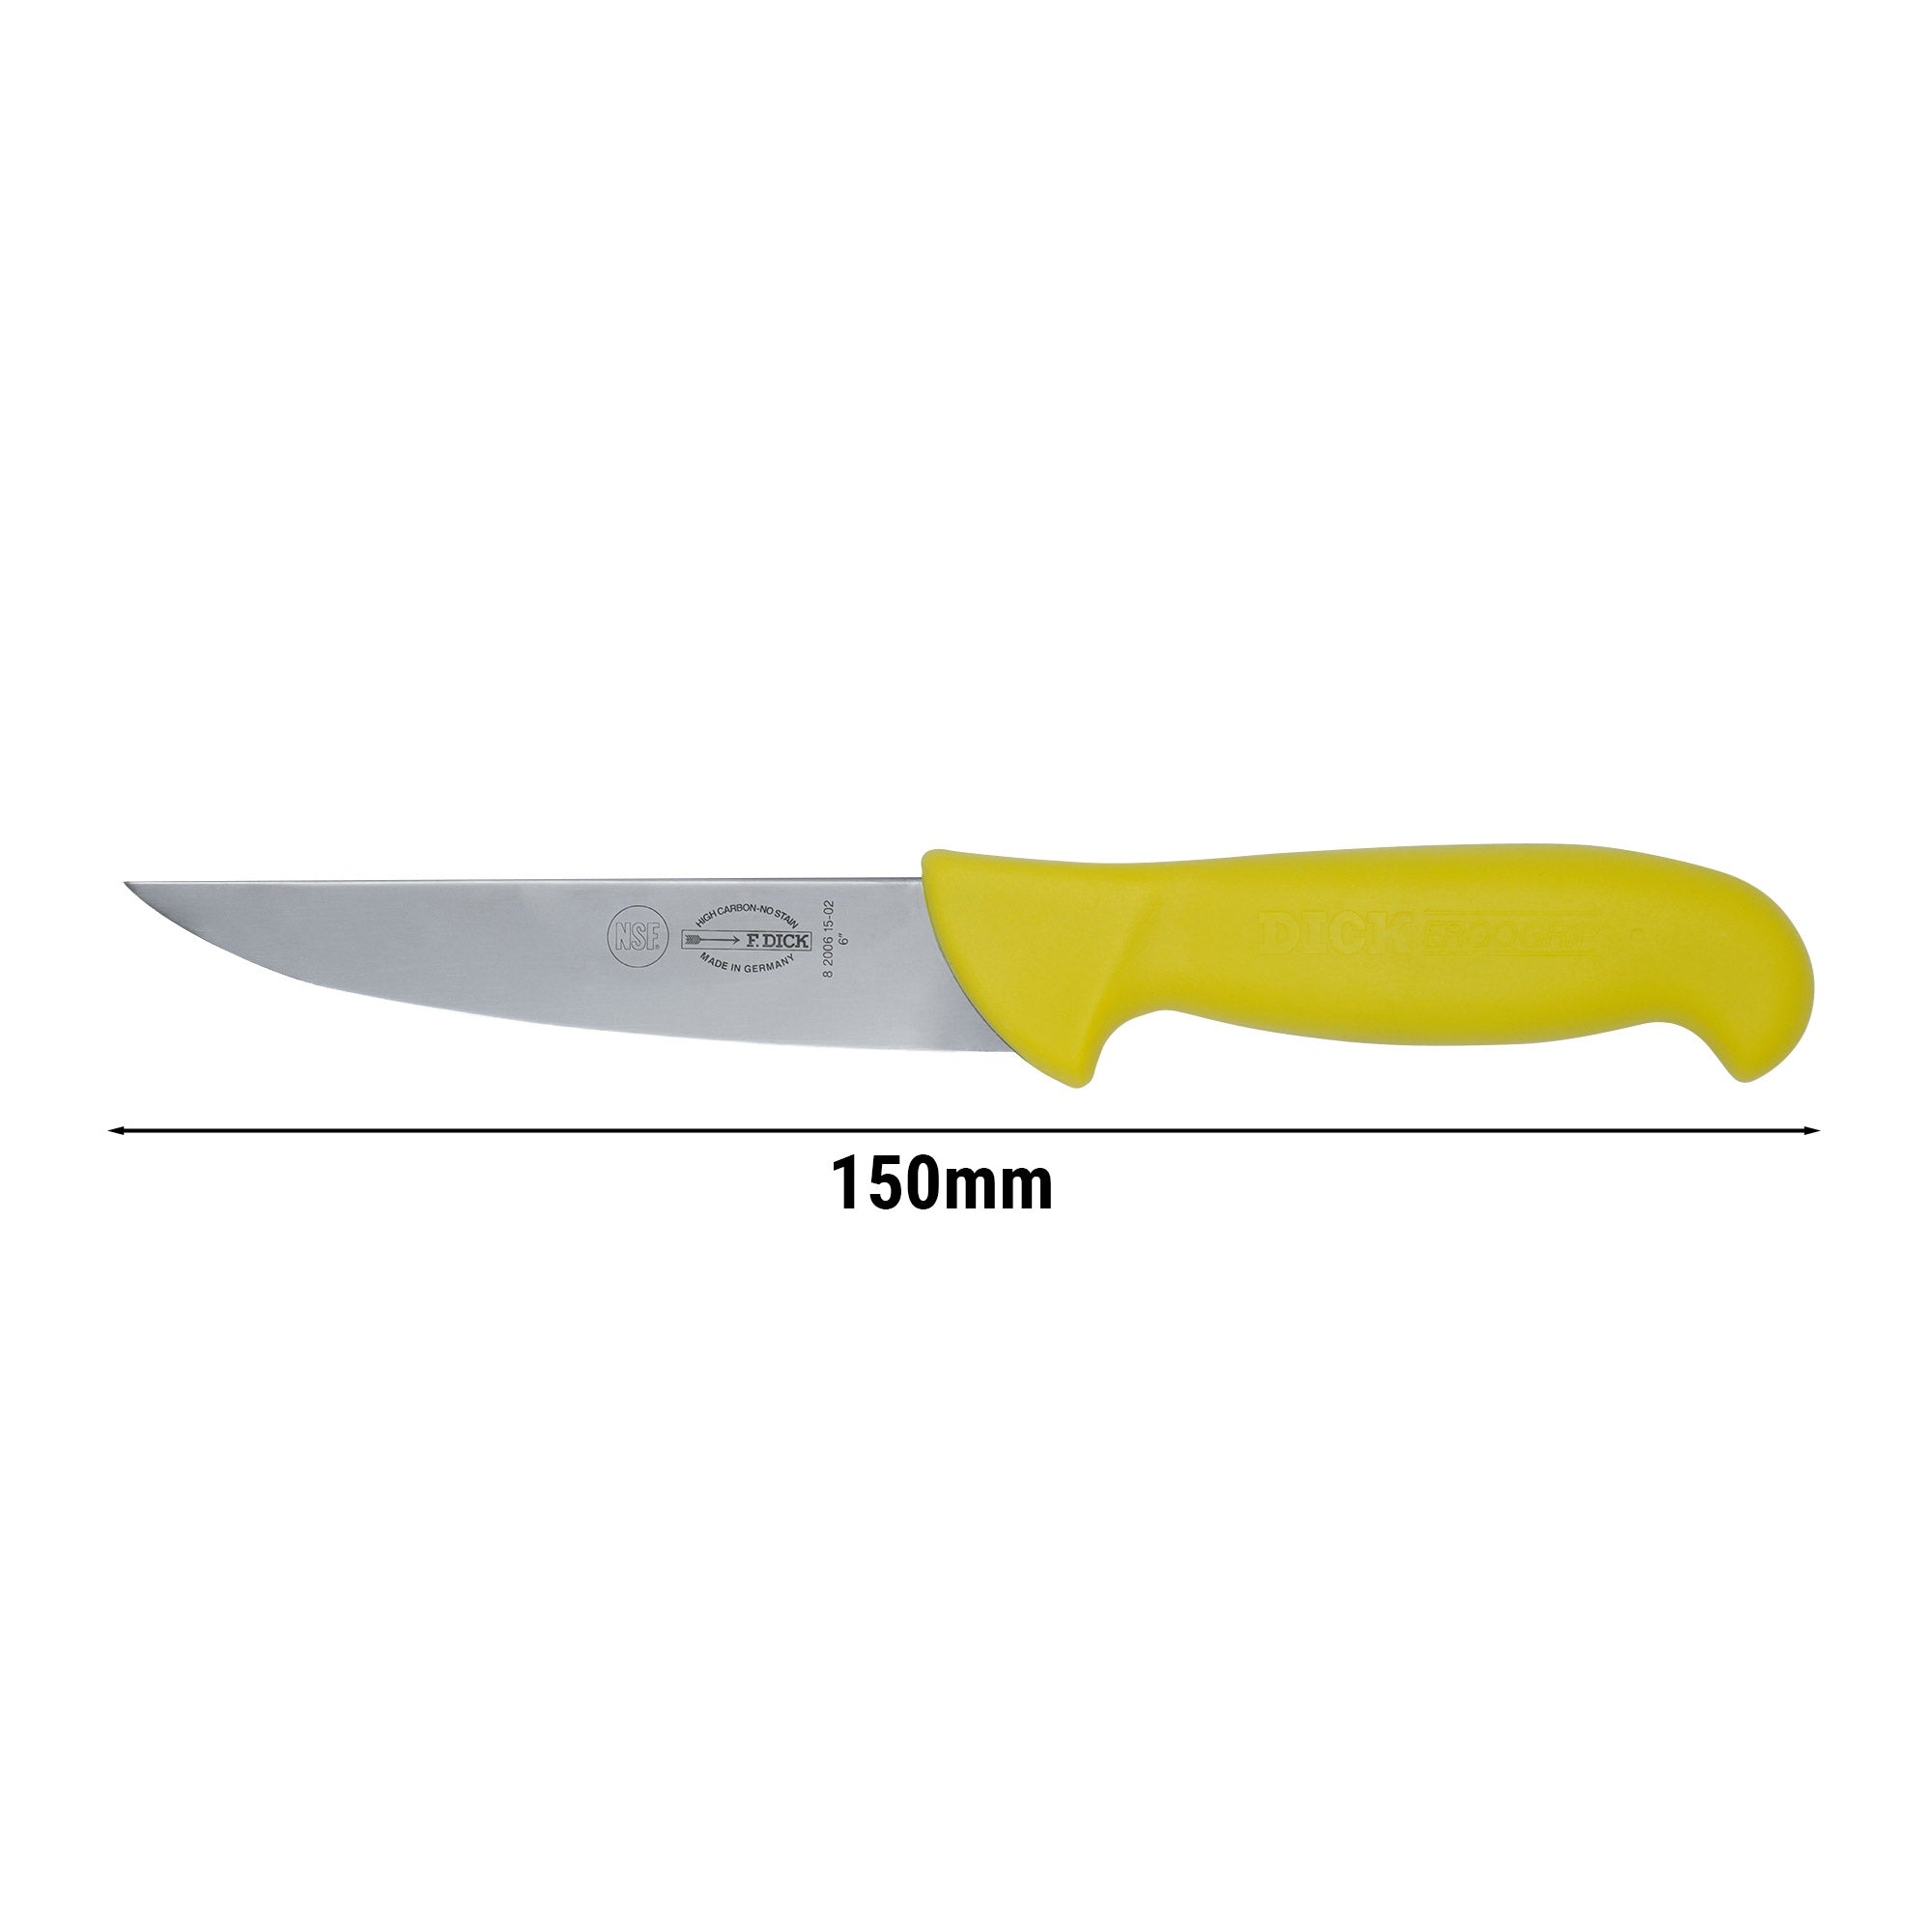 F. DICK Stick-kniv med gult håndtag - 15 cm